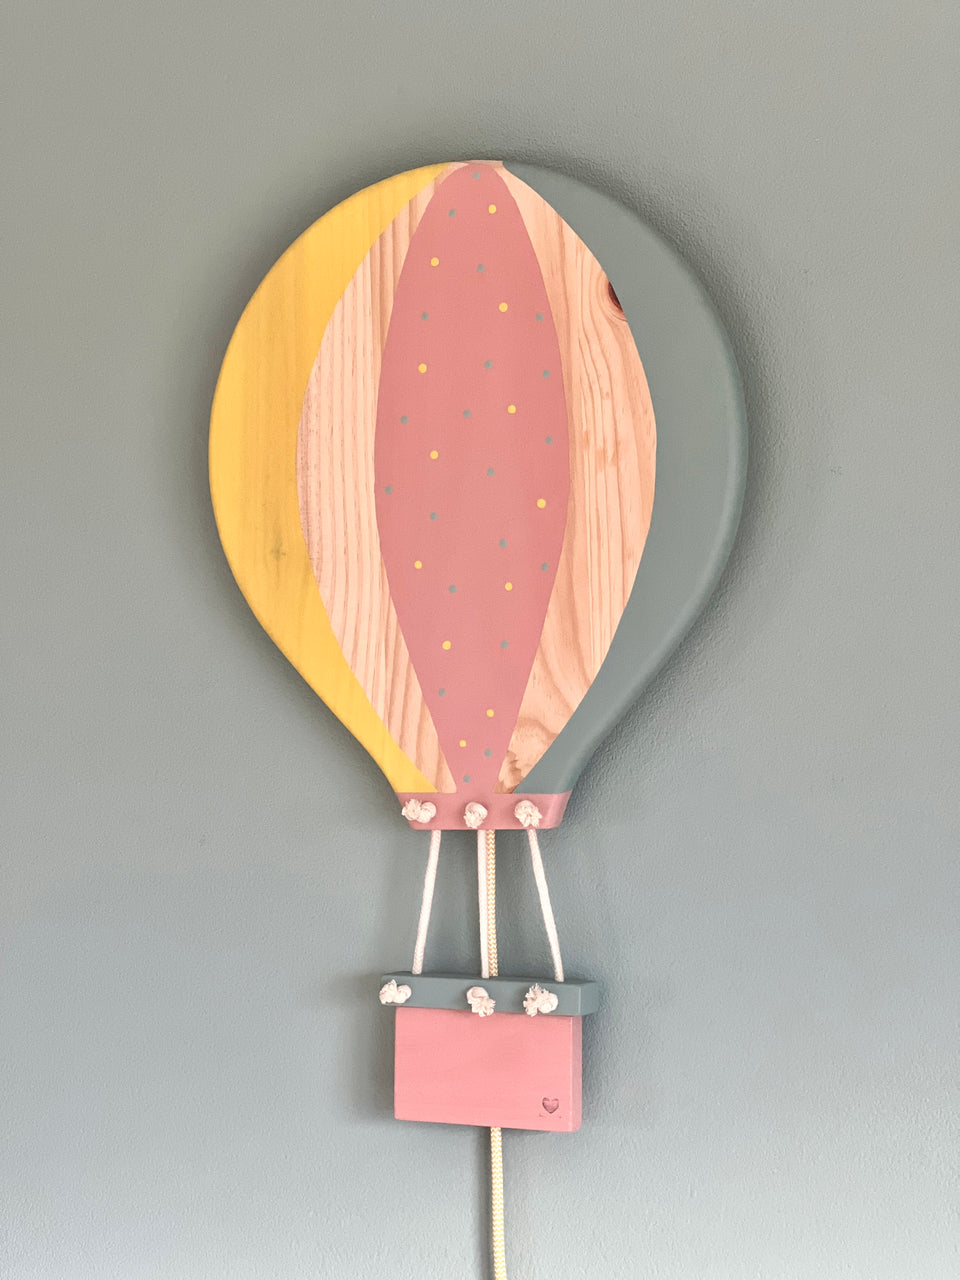 Candeeiro parede Balão Ar Quente Rosa Velho - Old Pink Hot Air Balloon Wall Lamp